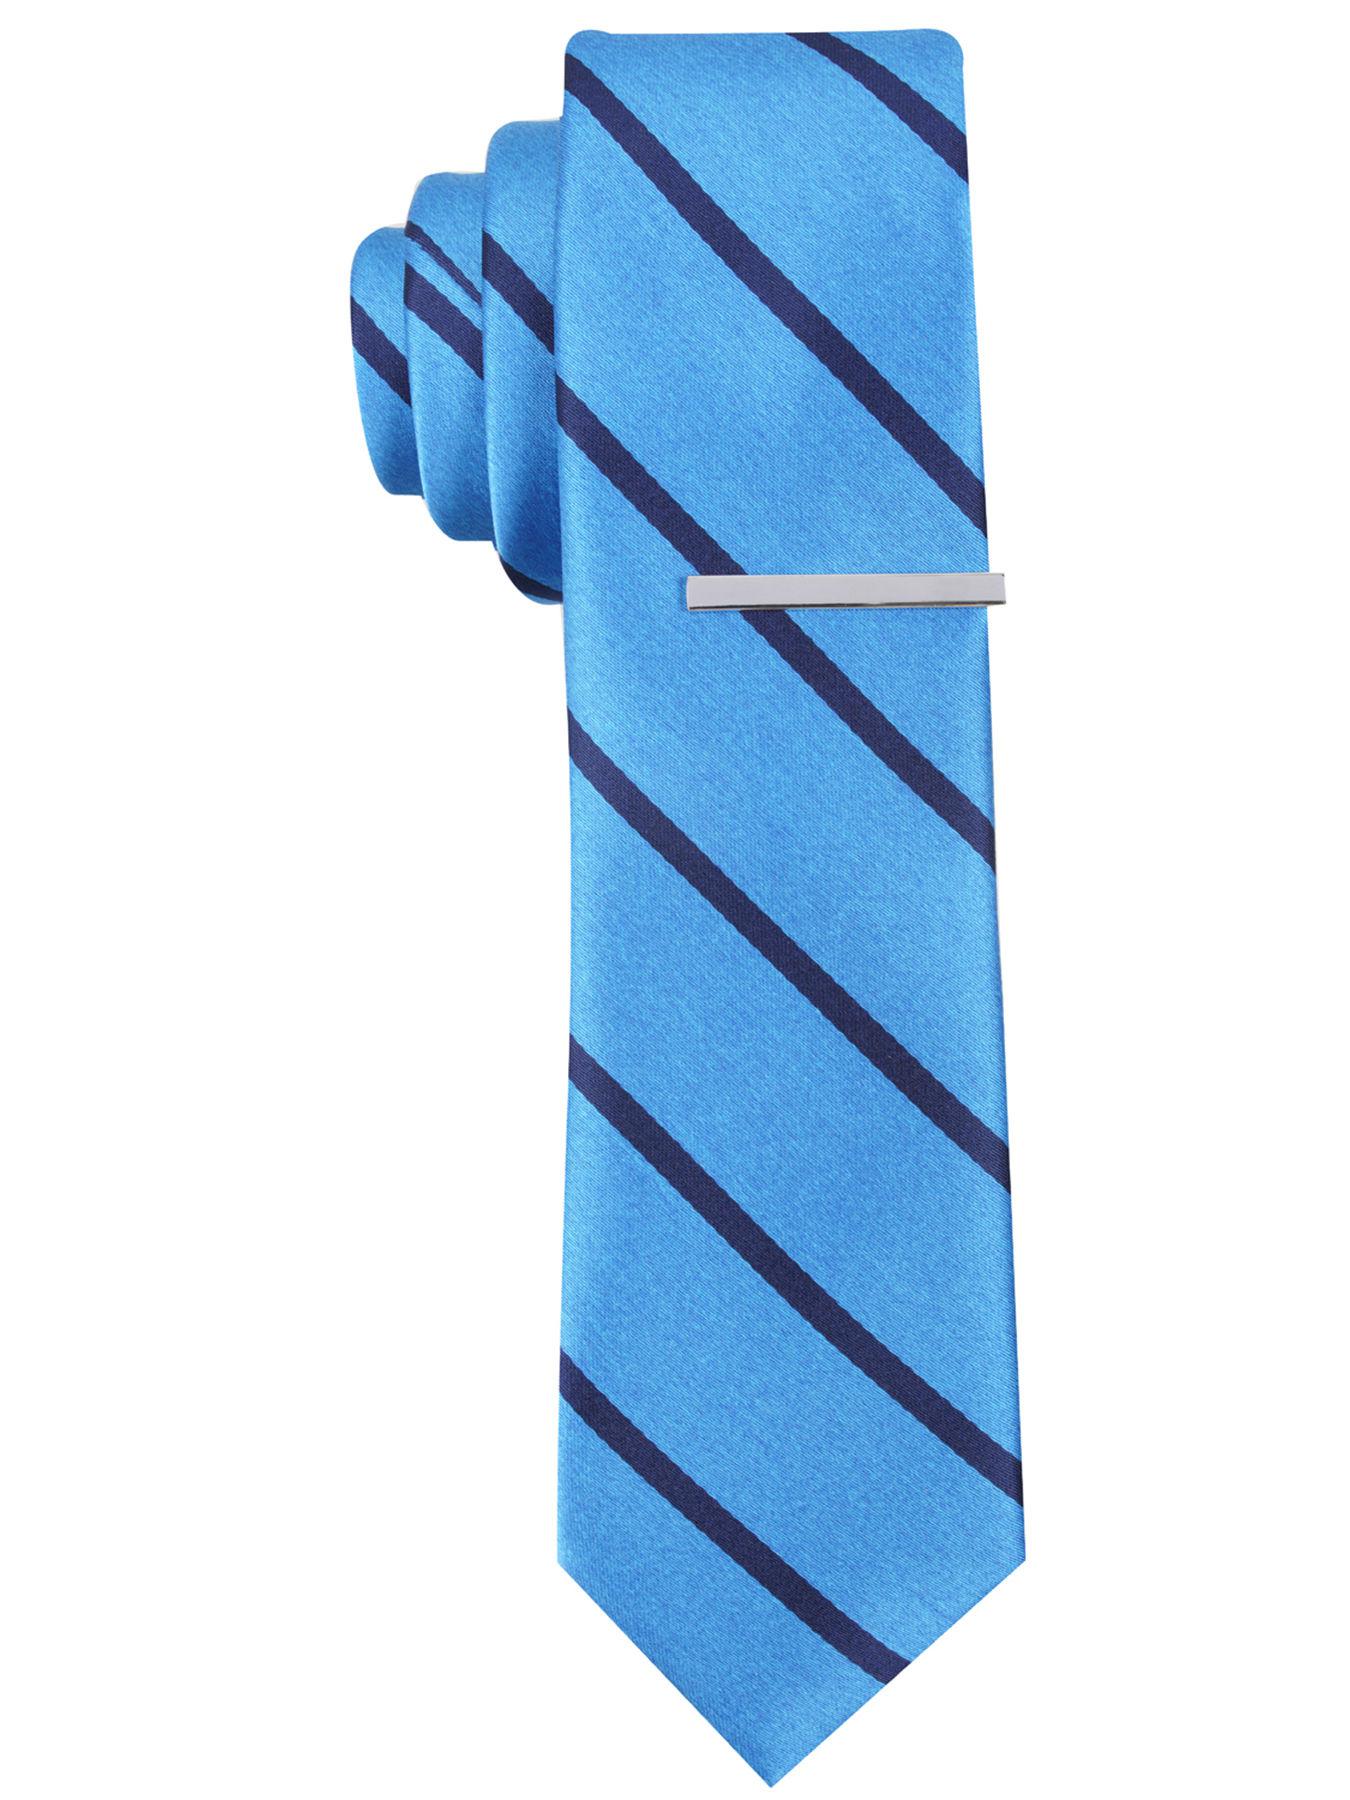 Perry Ellis Slim Harlech Stripe Tie in Blue for Men - Lyst